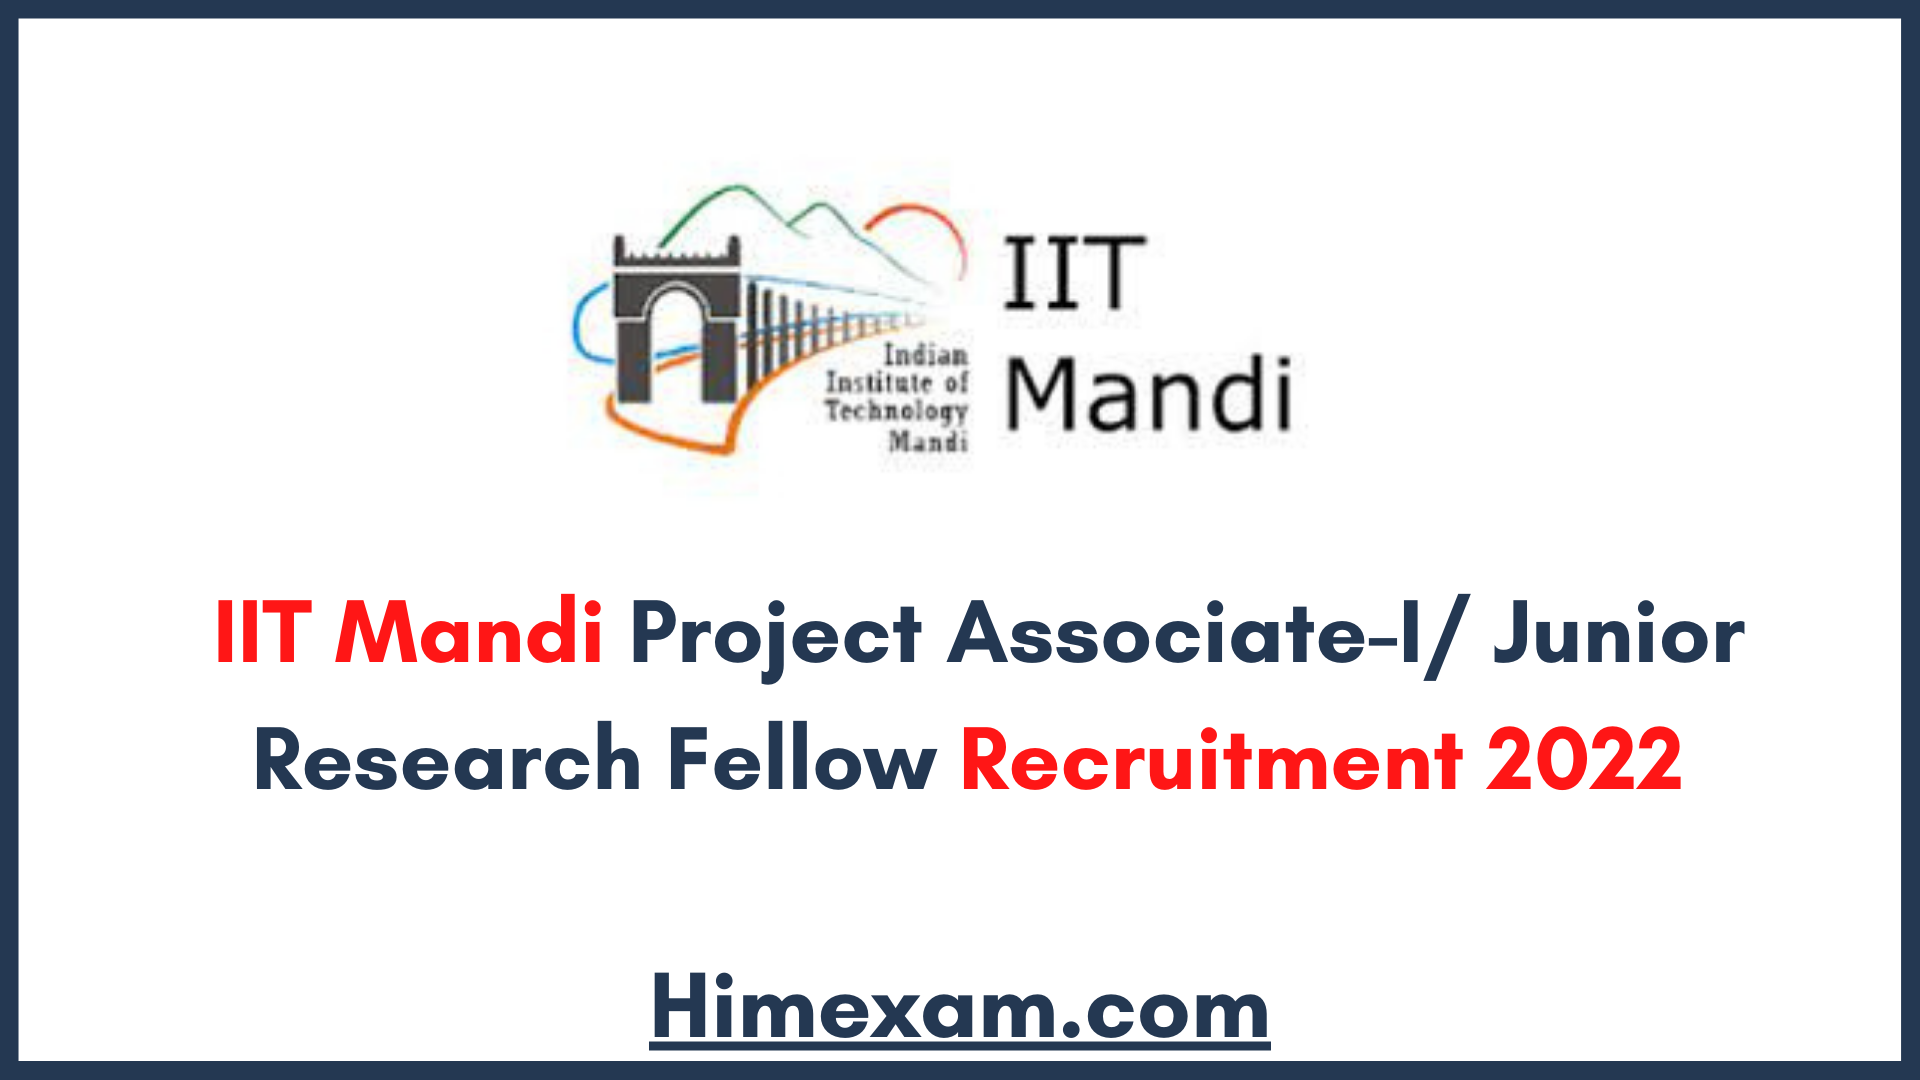 IIT Mandi Project Associate-I/ Junior Research Fellow Recruitment 2022